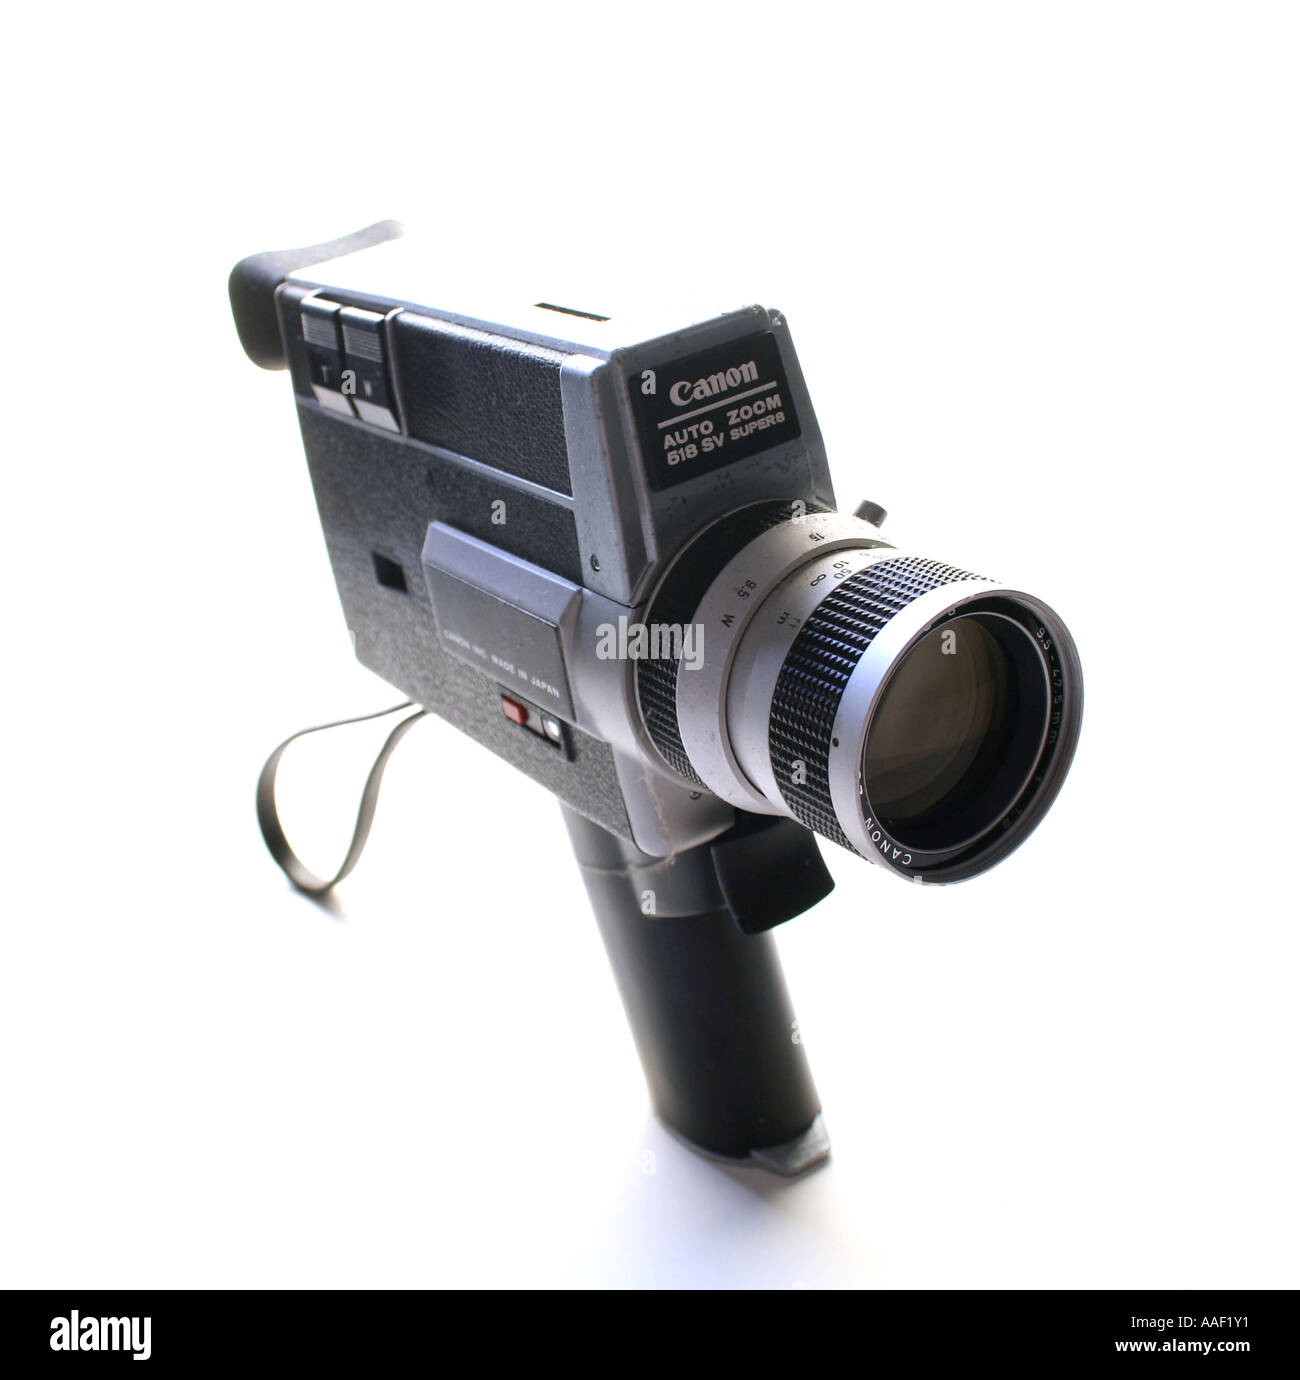 8mm camera -Fotos und -Bildmaterial in hoher Auflösung – Alamy